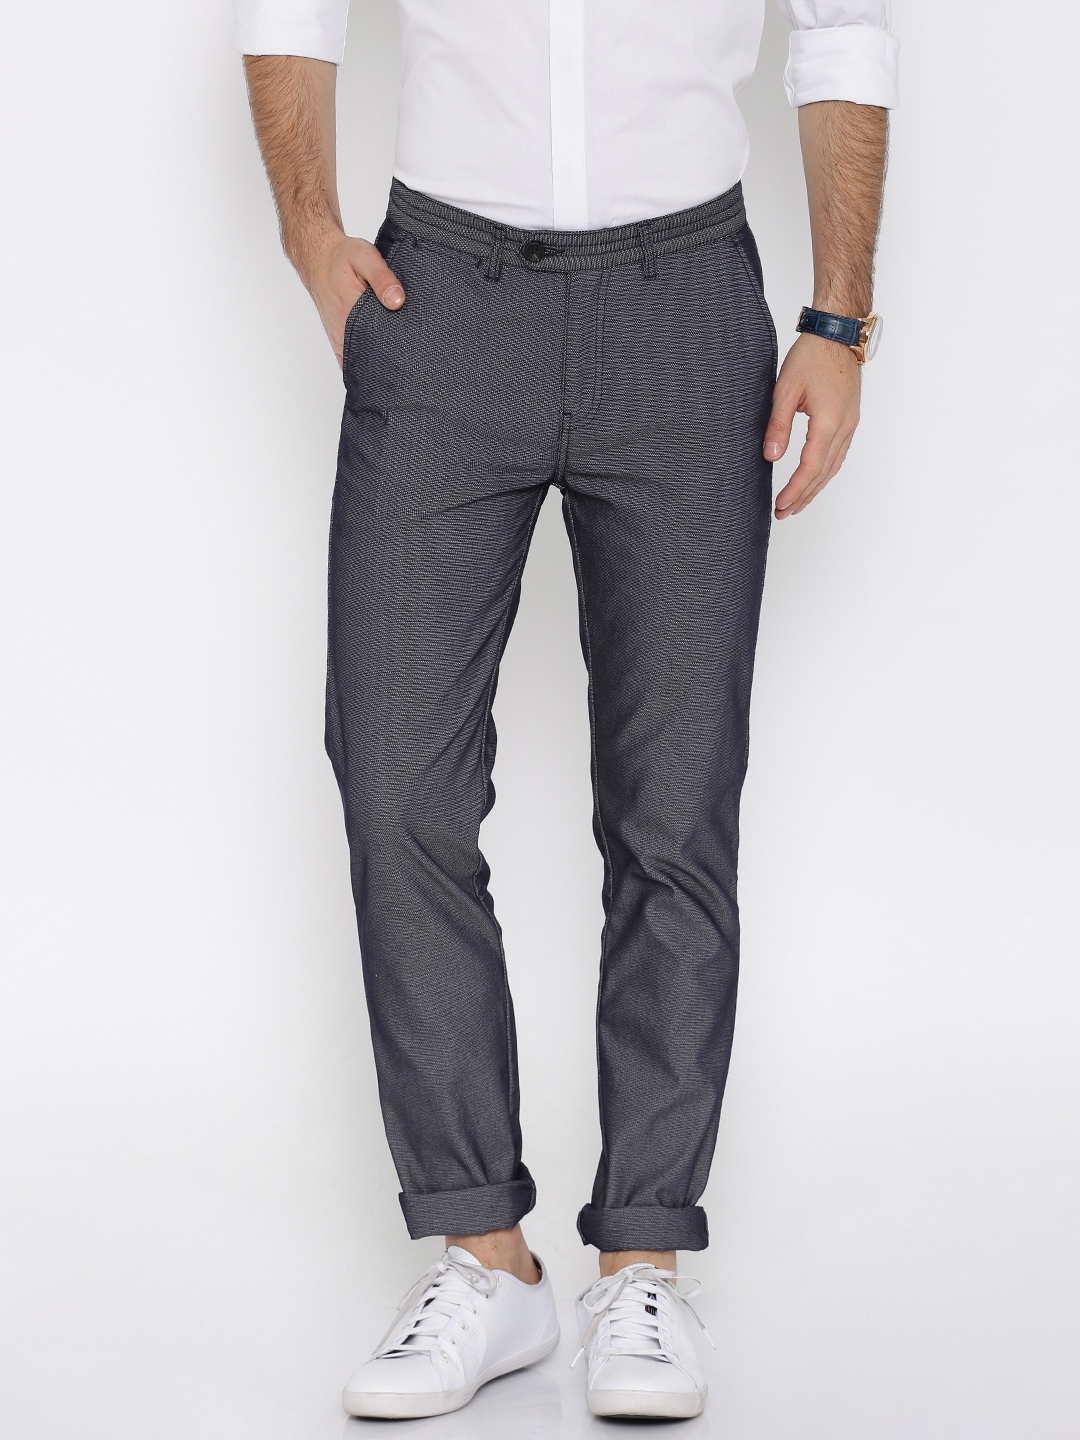 Ucb Slim Fit Trousers  Buy Ucb Slim Fit Trousers online in India